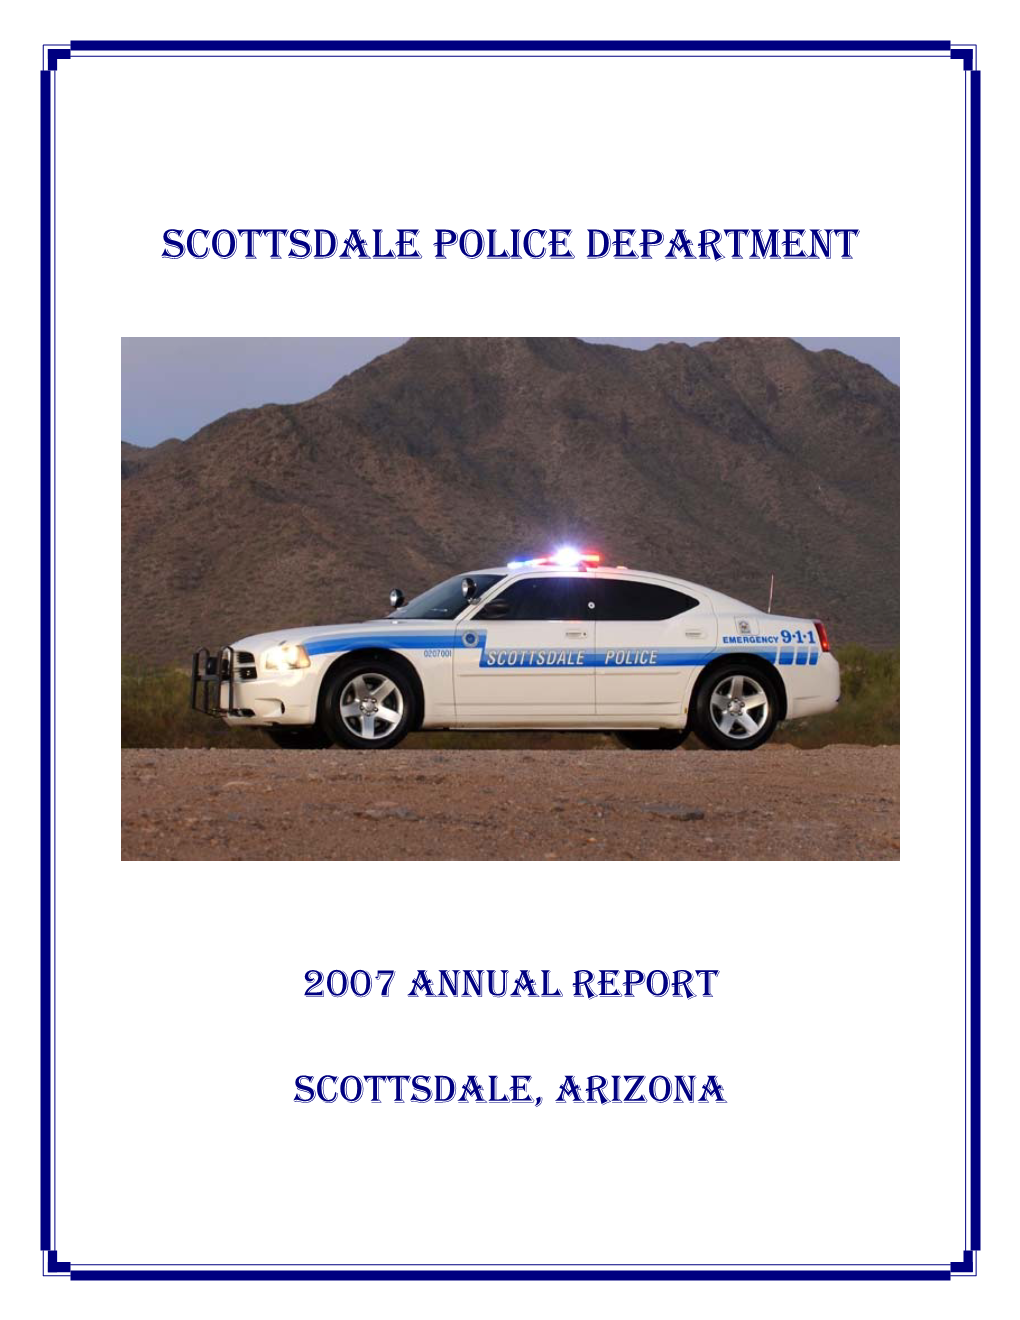 Scottsdale Police Department